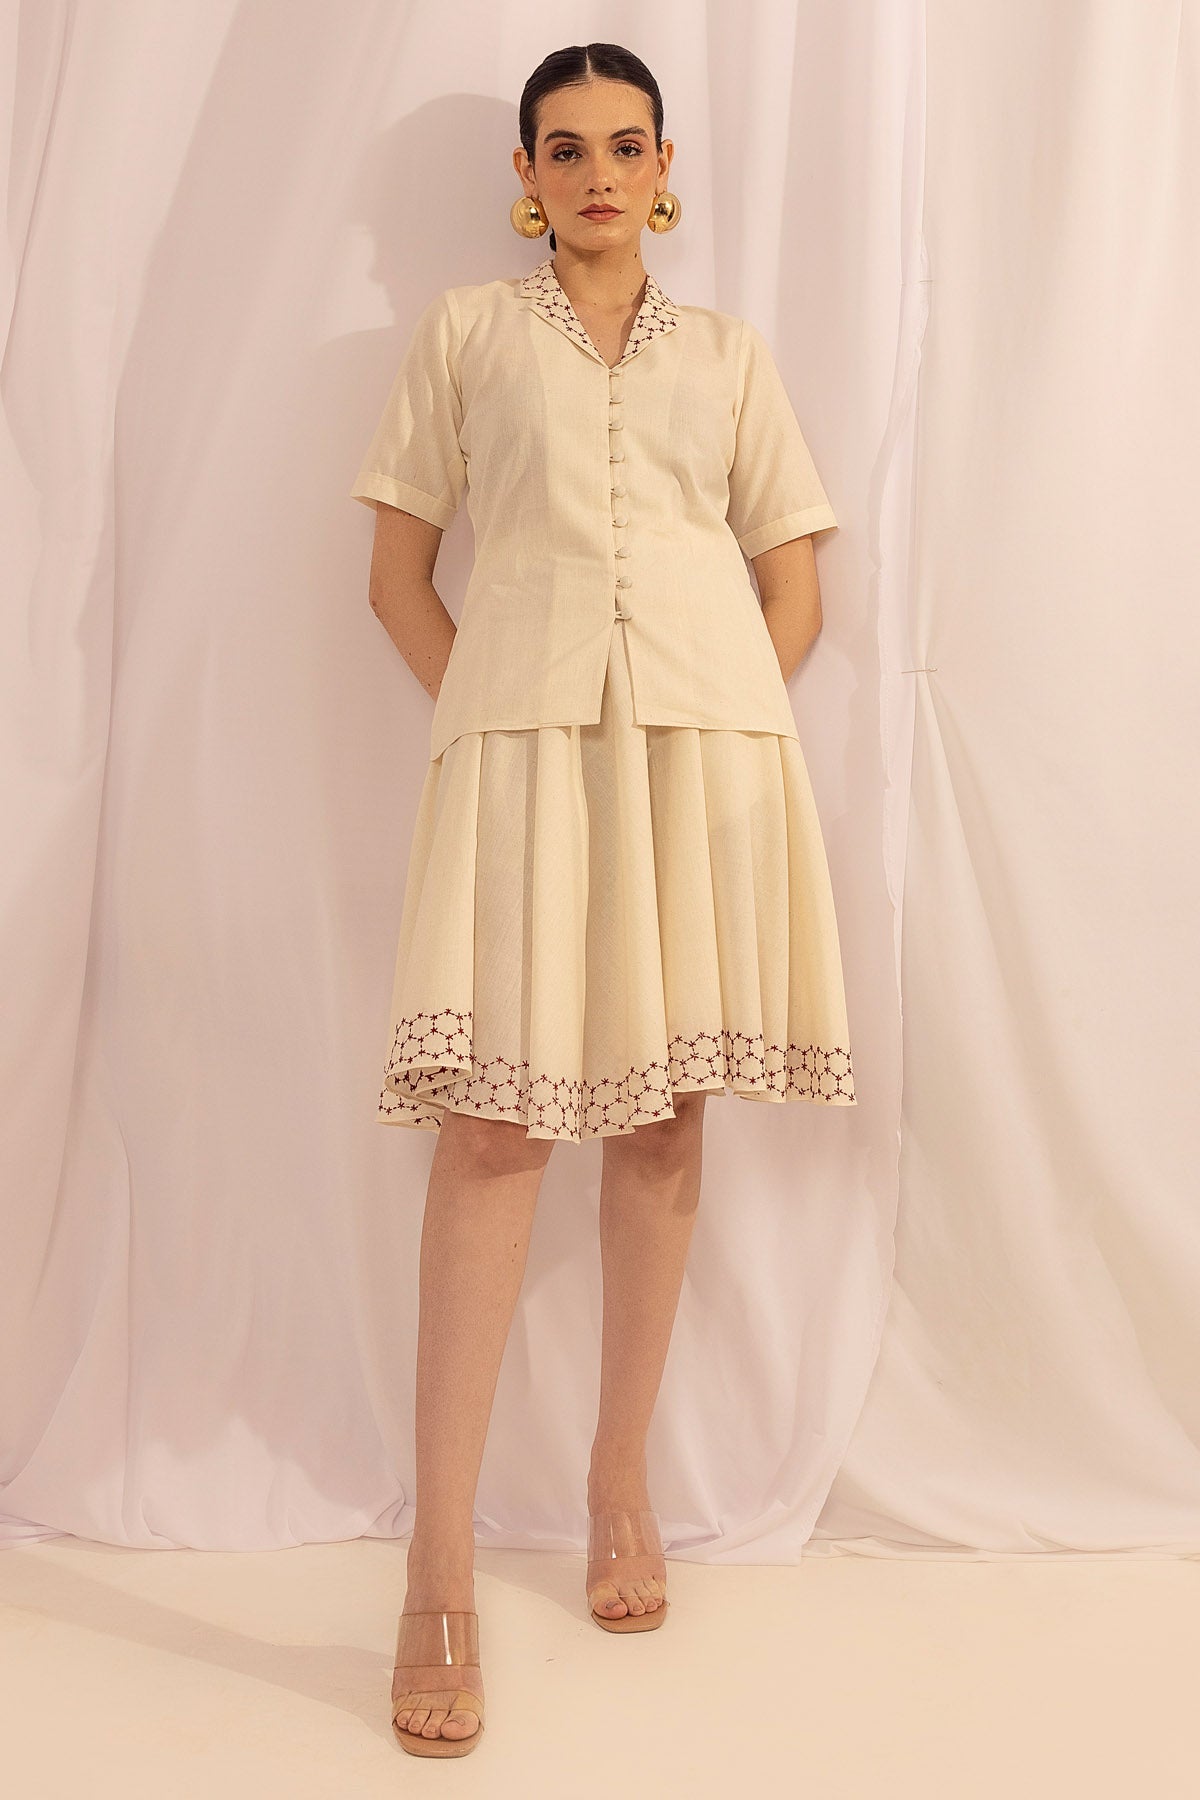 Buy The House of Ara Flirty Flair: Kantha Embroidered Skirt At ScrollnShops